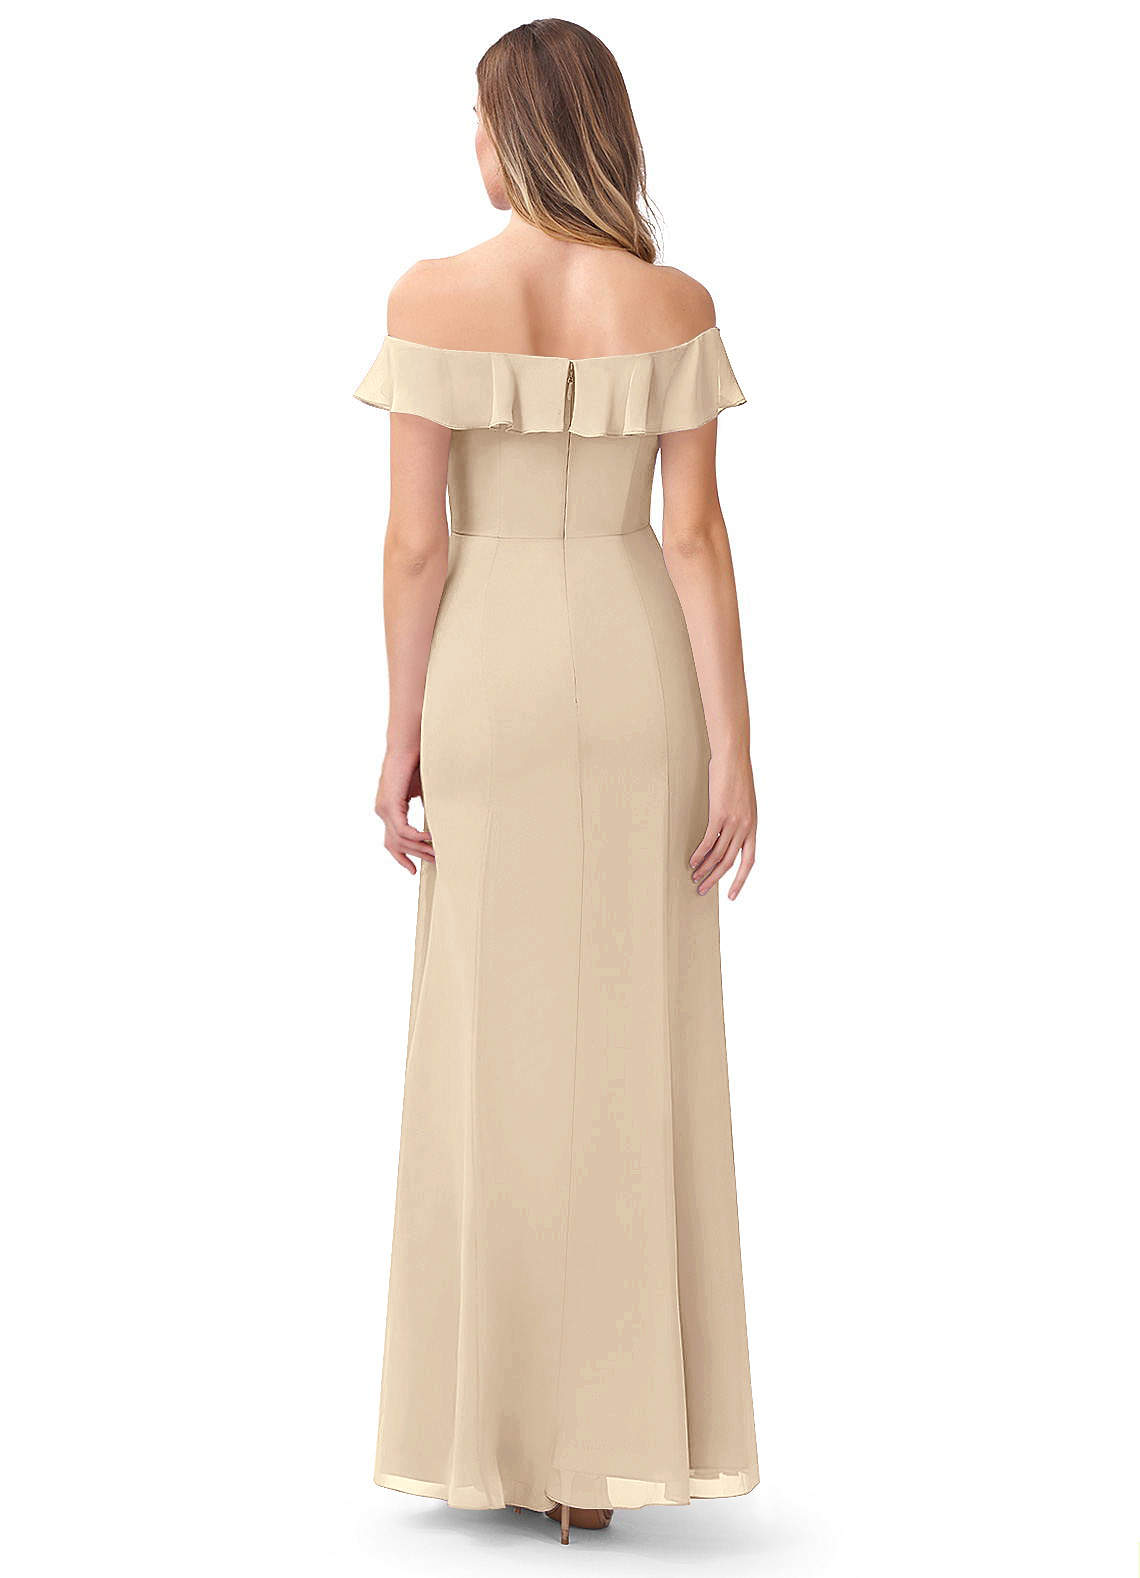 Azazie Sophie Bridesmaid Dresses A-Line Off the Shoulder Chiffon Floor-Length Dress image1